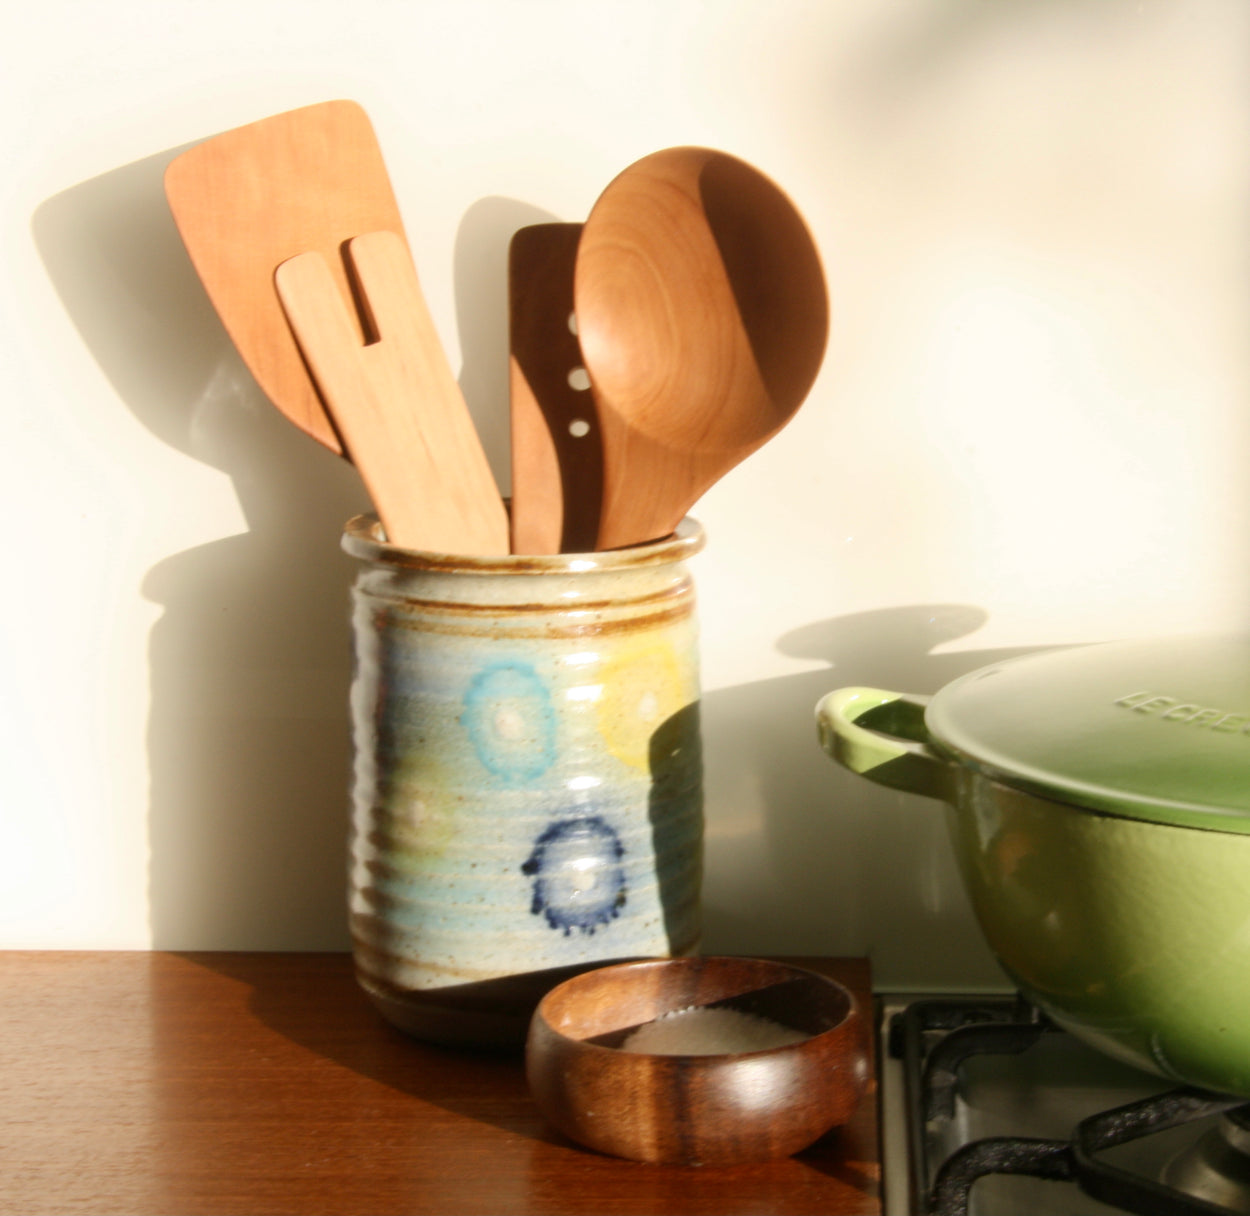 Handmade Pear Wood Kitchen Spatula in ceramic kitchen utensil holder  next to green pot.